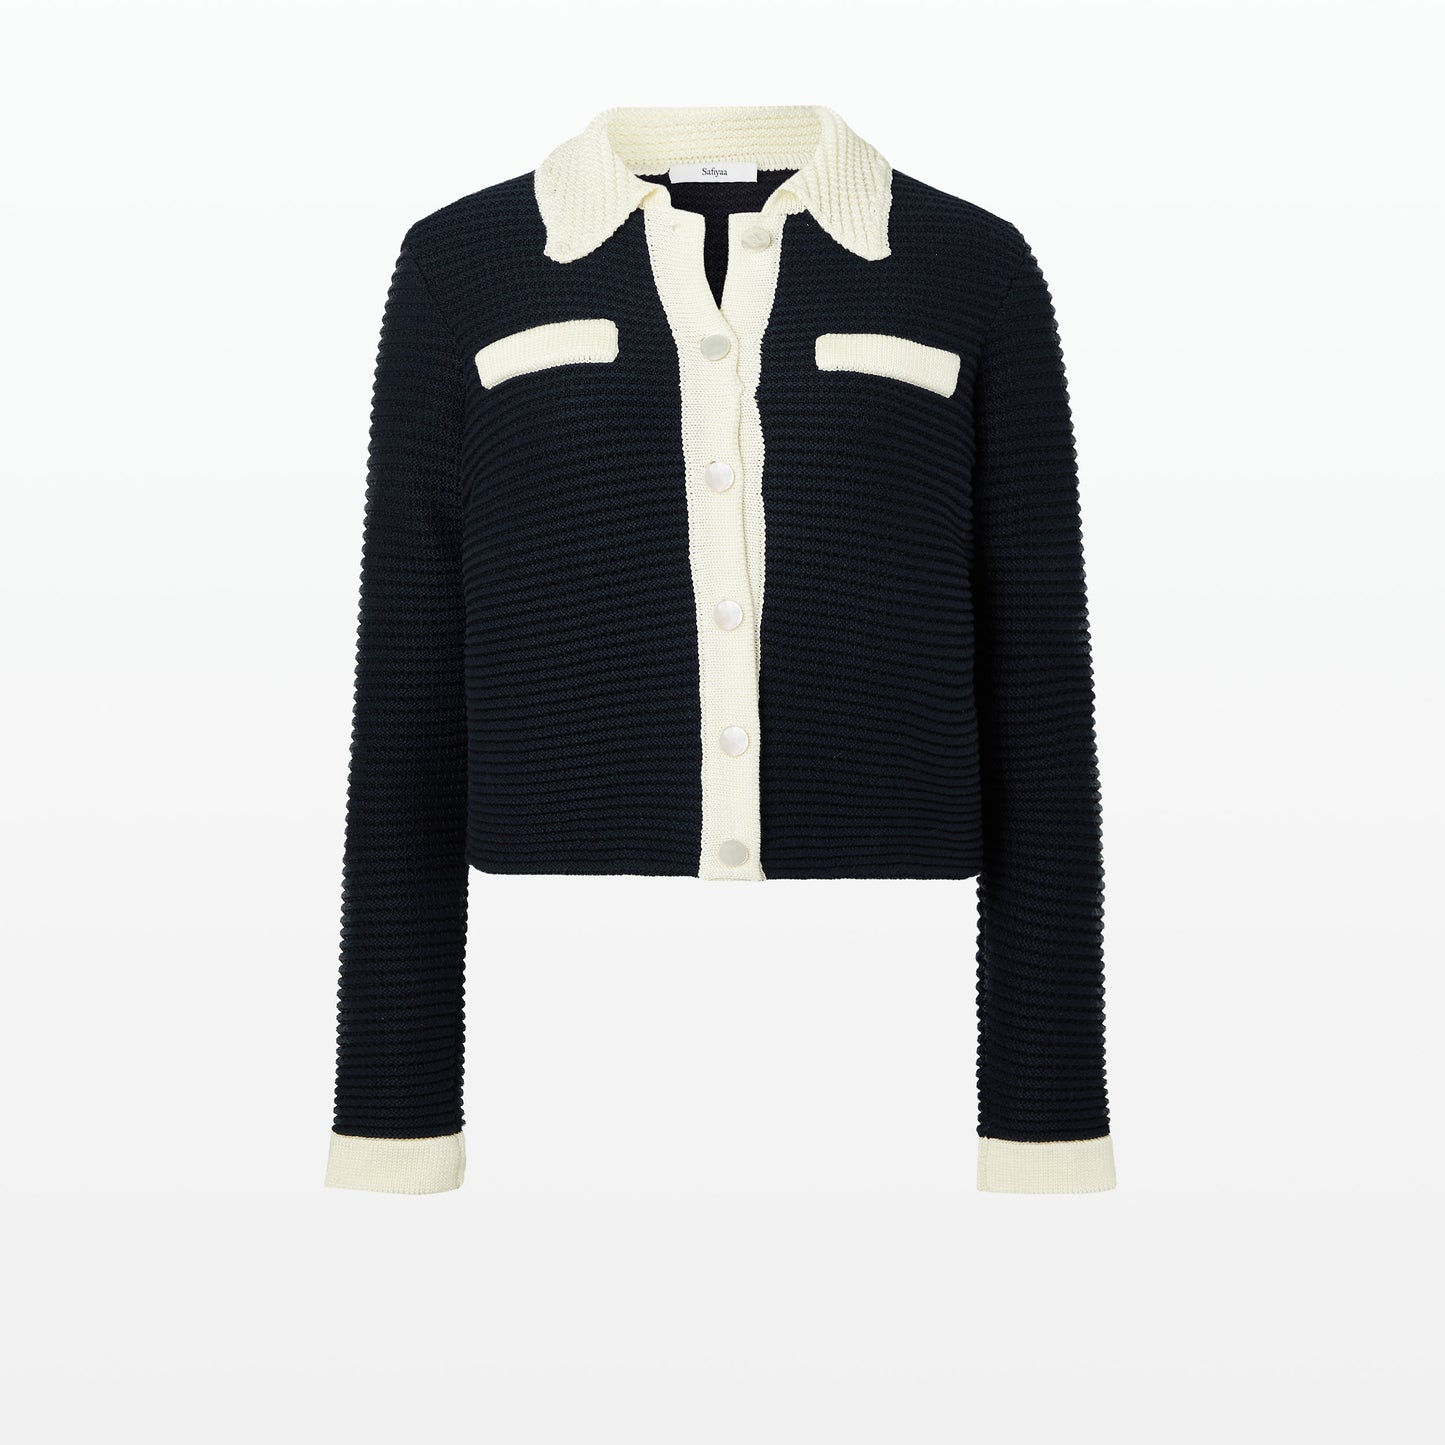 Artemis Navy & Ivory Crochet Jacket